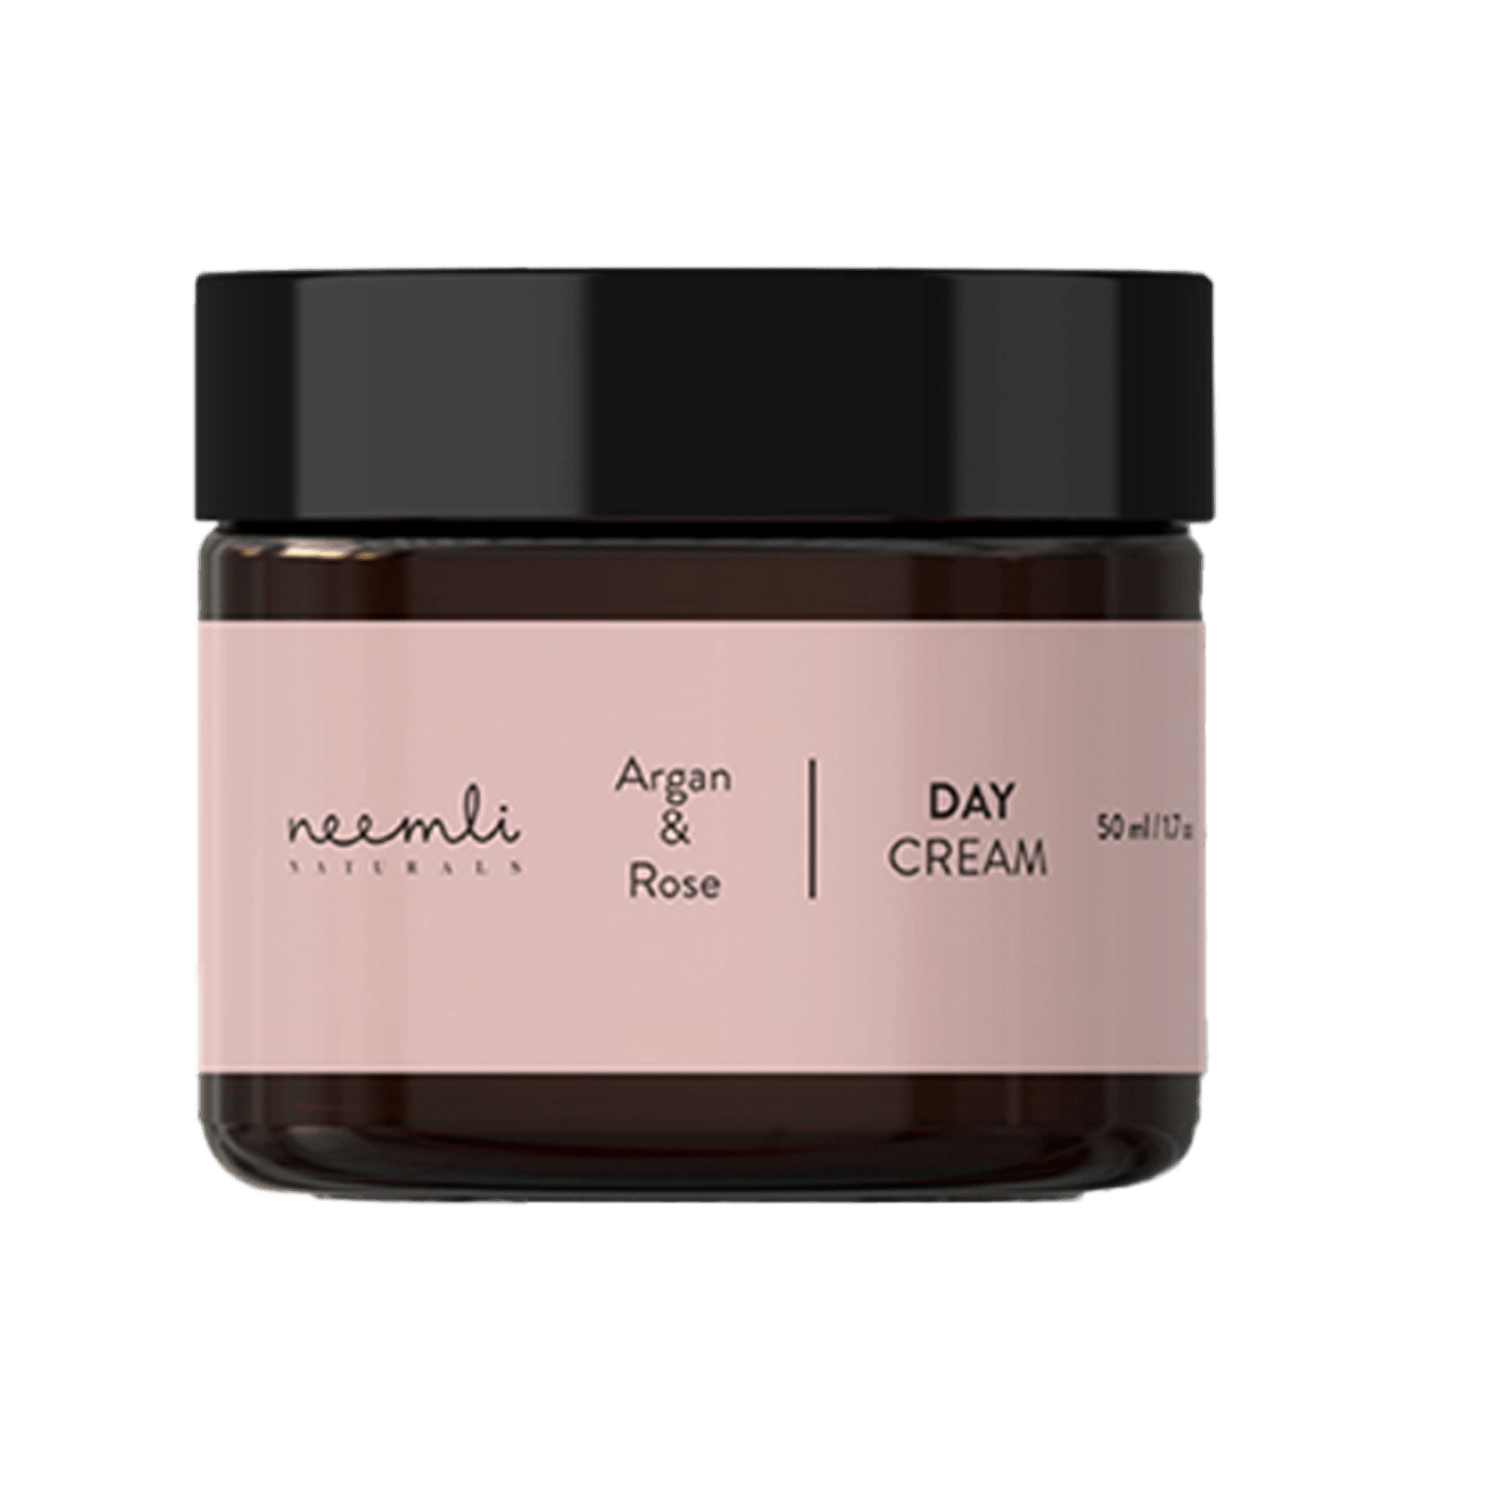 Neemli Naturals | Neemli Naturals Argan & Rose Day Cream (50ml)